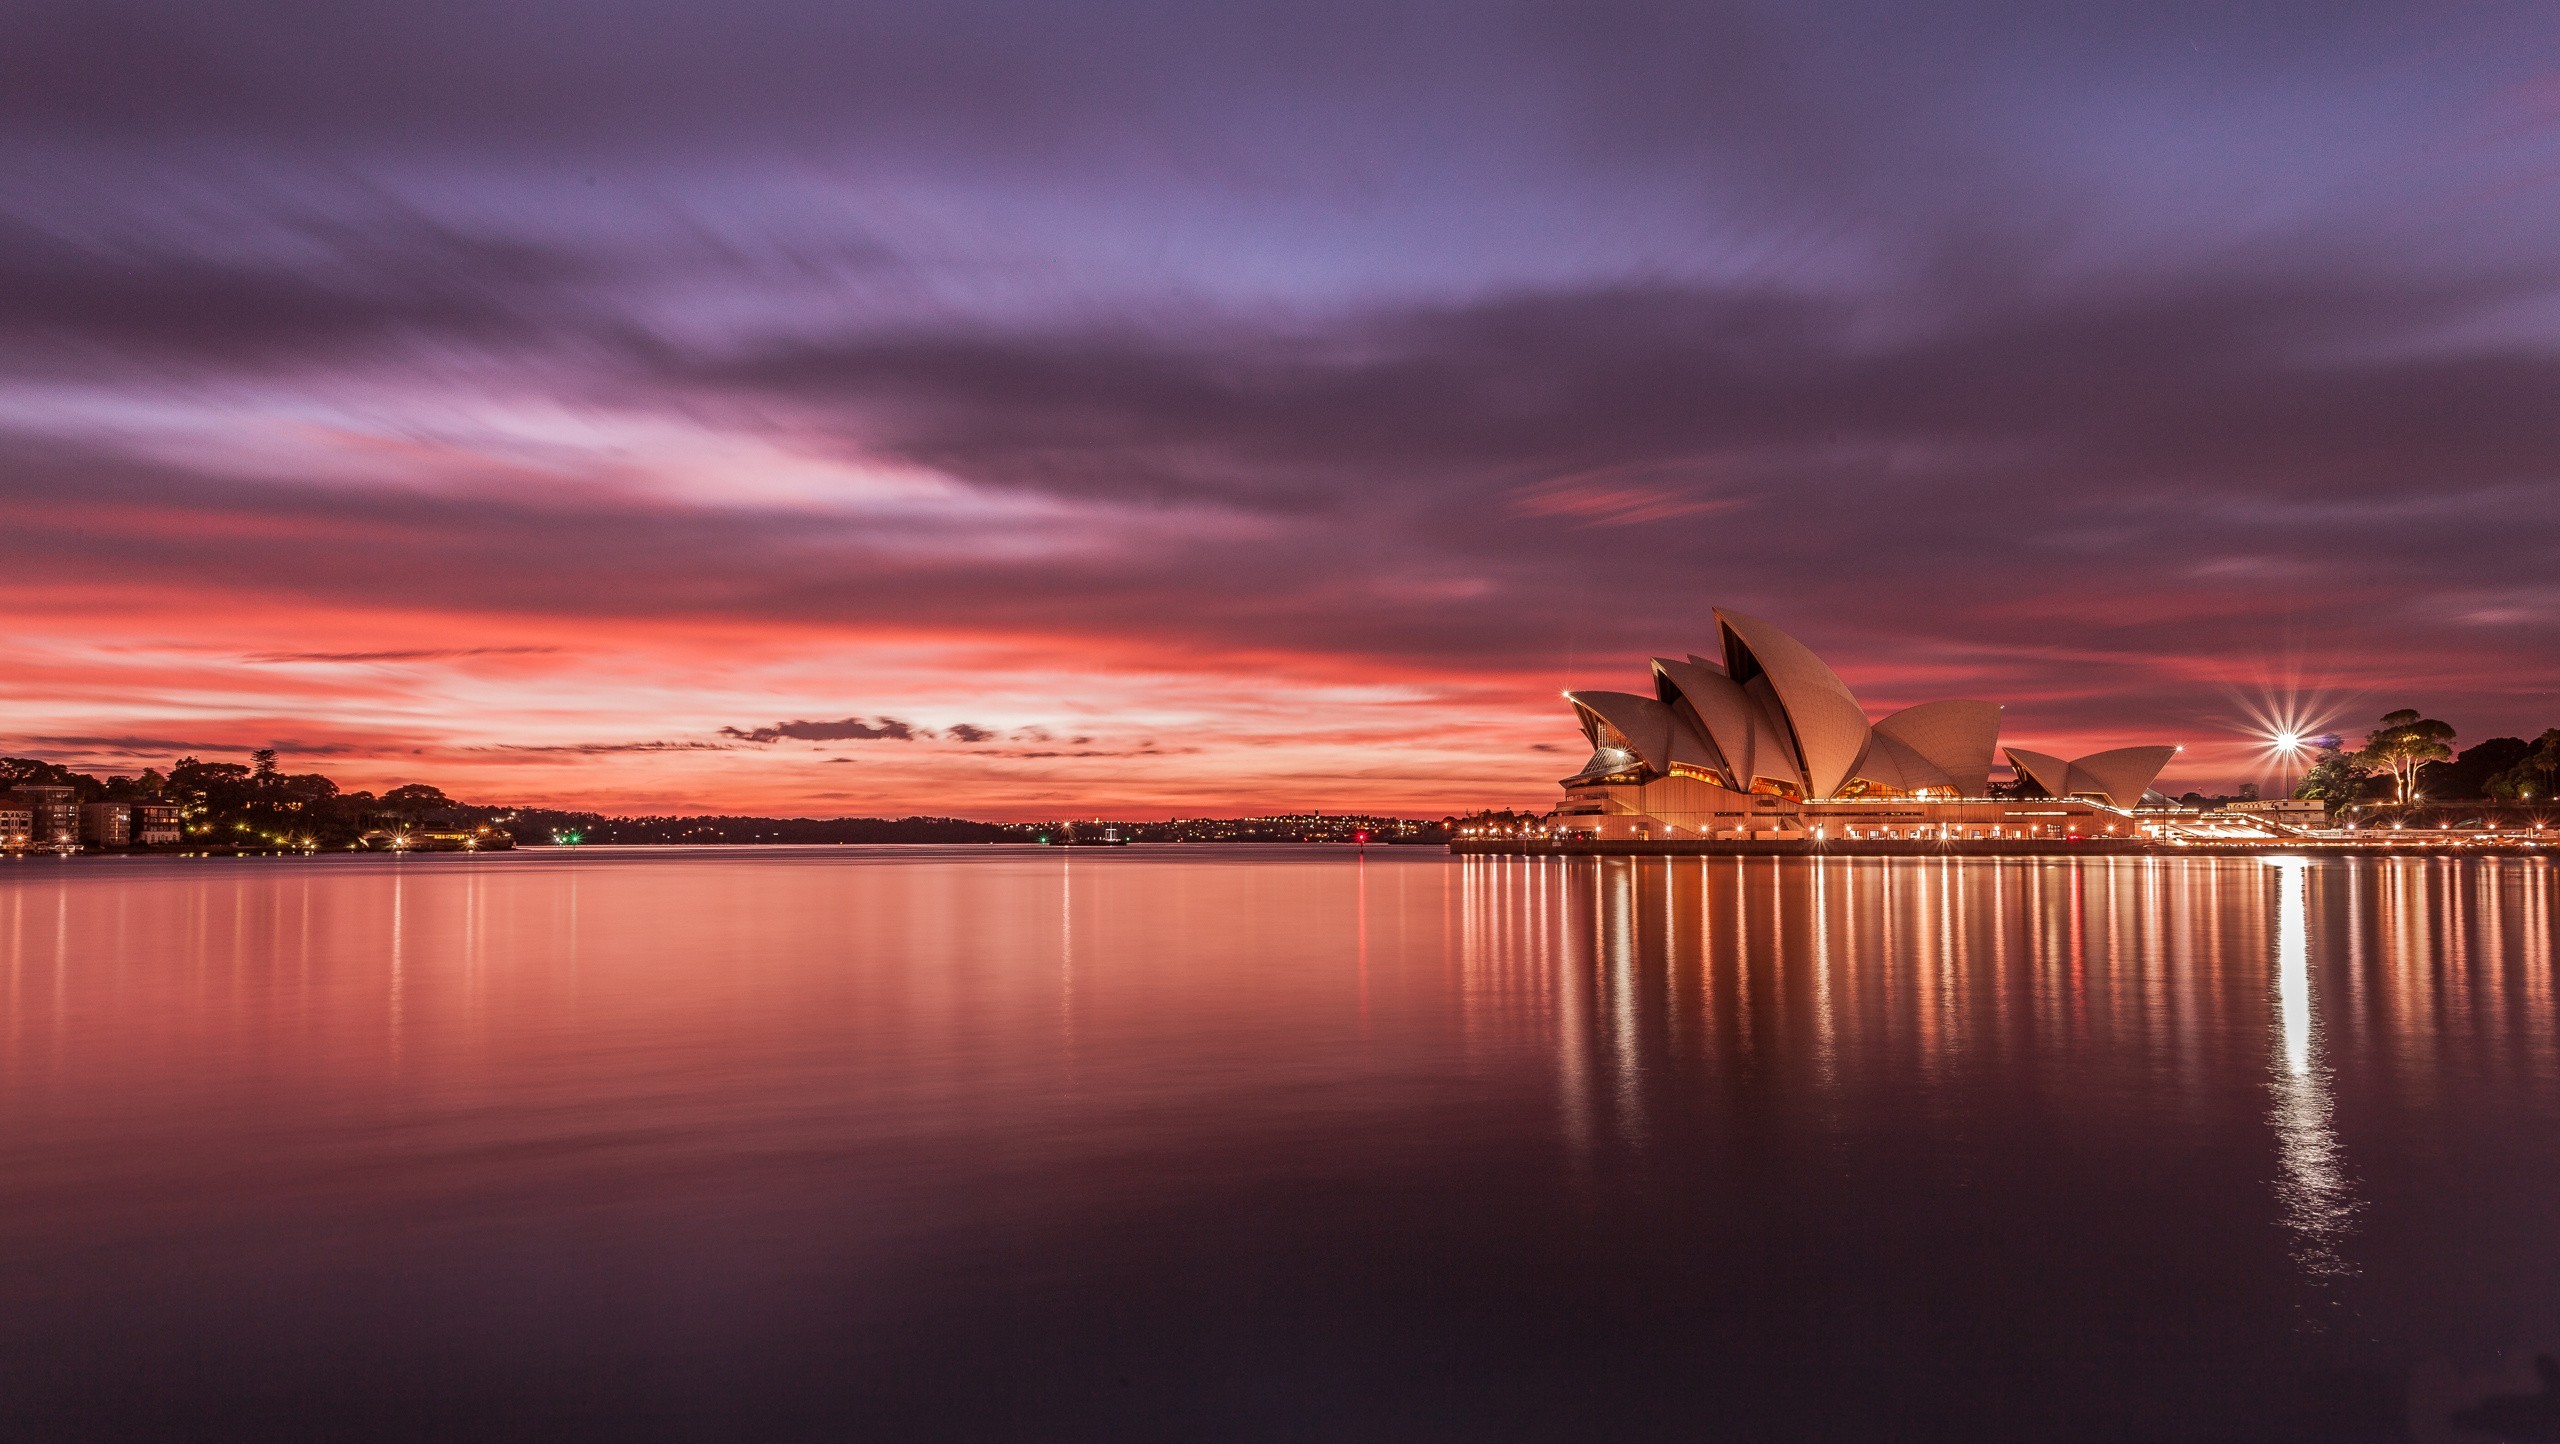 General 2560x1444 cityscape Sydney Sydney Opera House sunset purple sky sky calm waters Australia low light